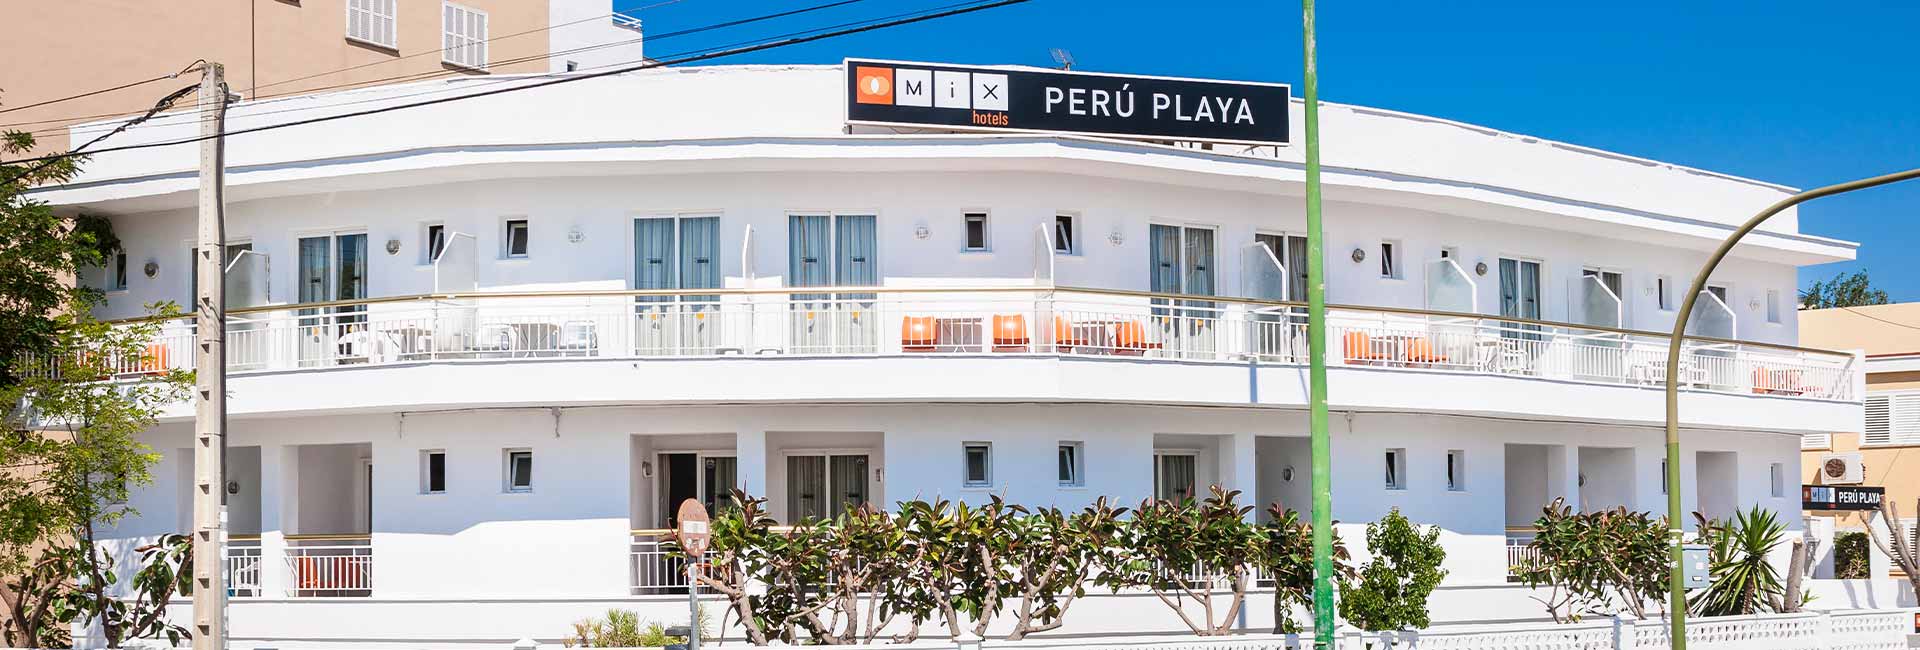 Welcome to the Mix Peru Playa Hotel